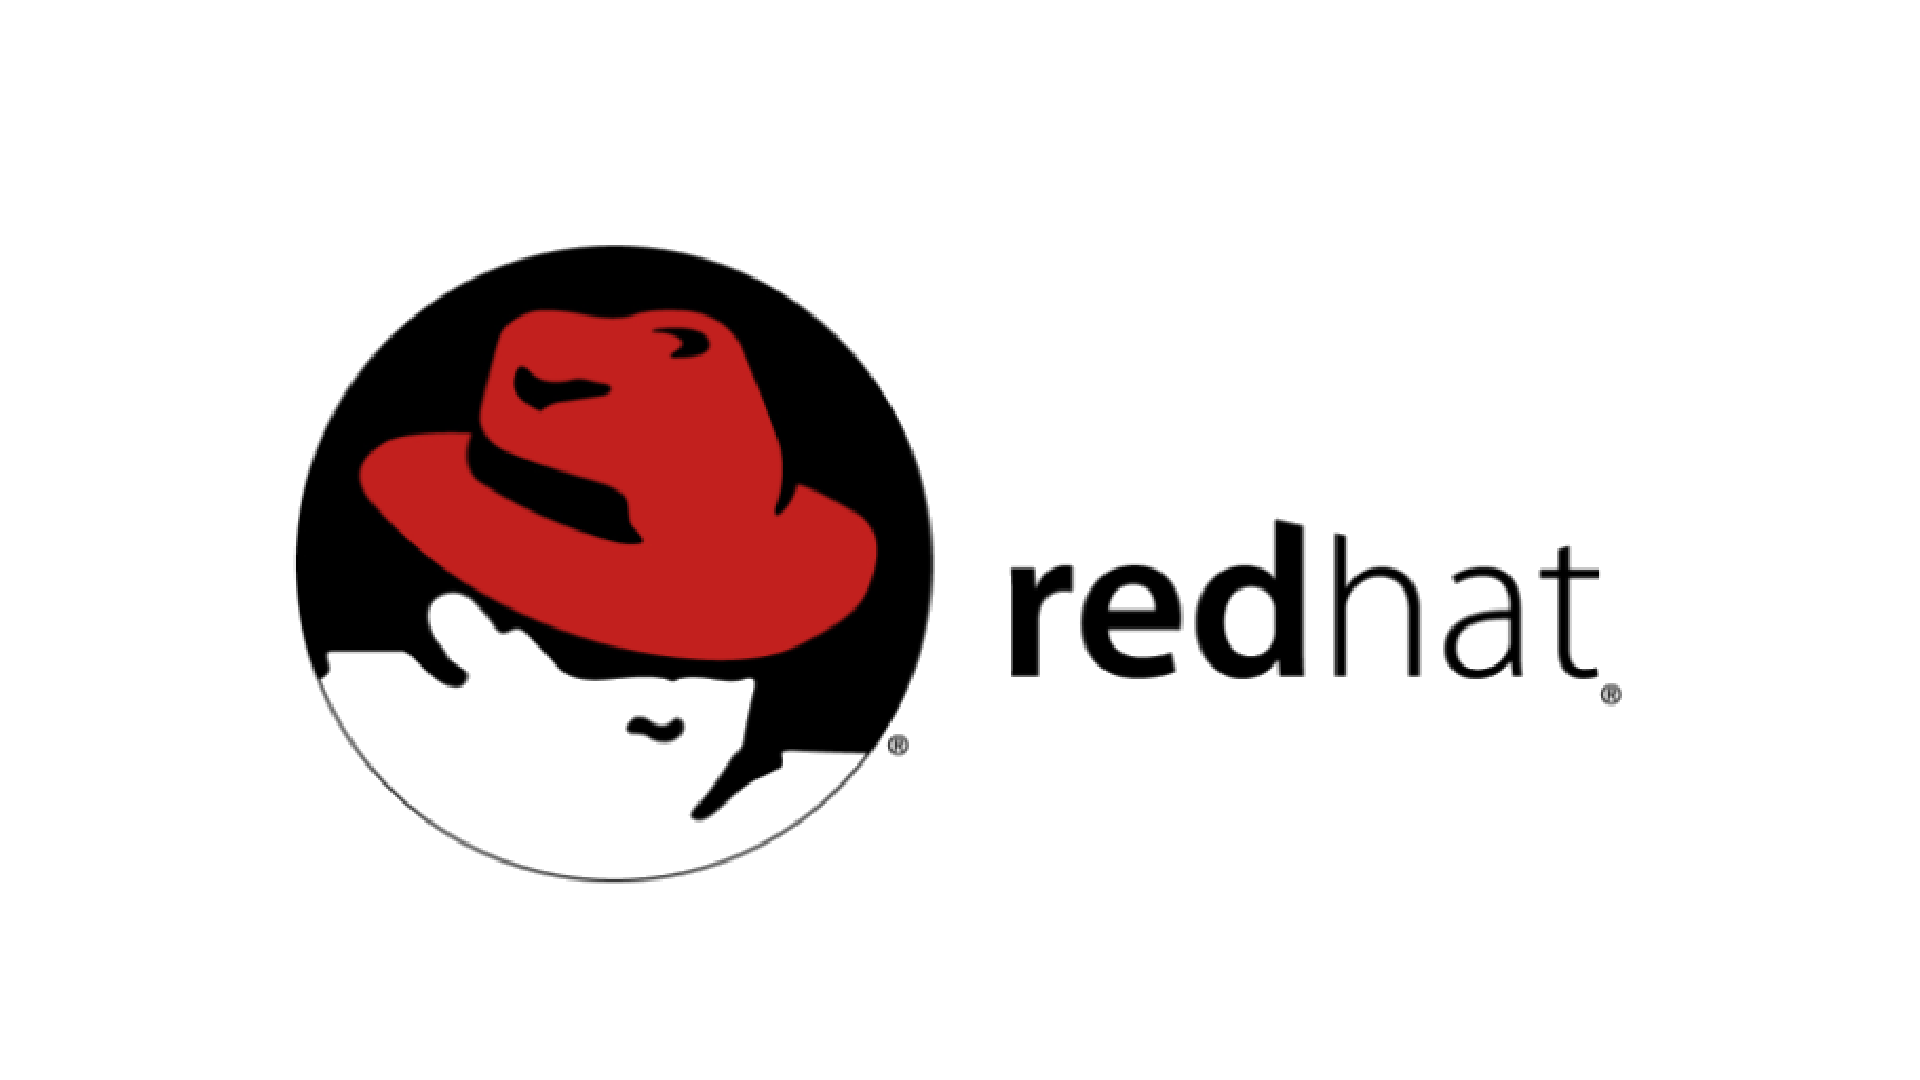 Ред хат. Red hat Enterprise Linux. Red hat Enterprise Linux (RHEL). Значок Red hat. Red hat Enterprise логотип.